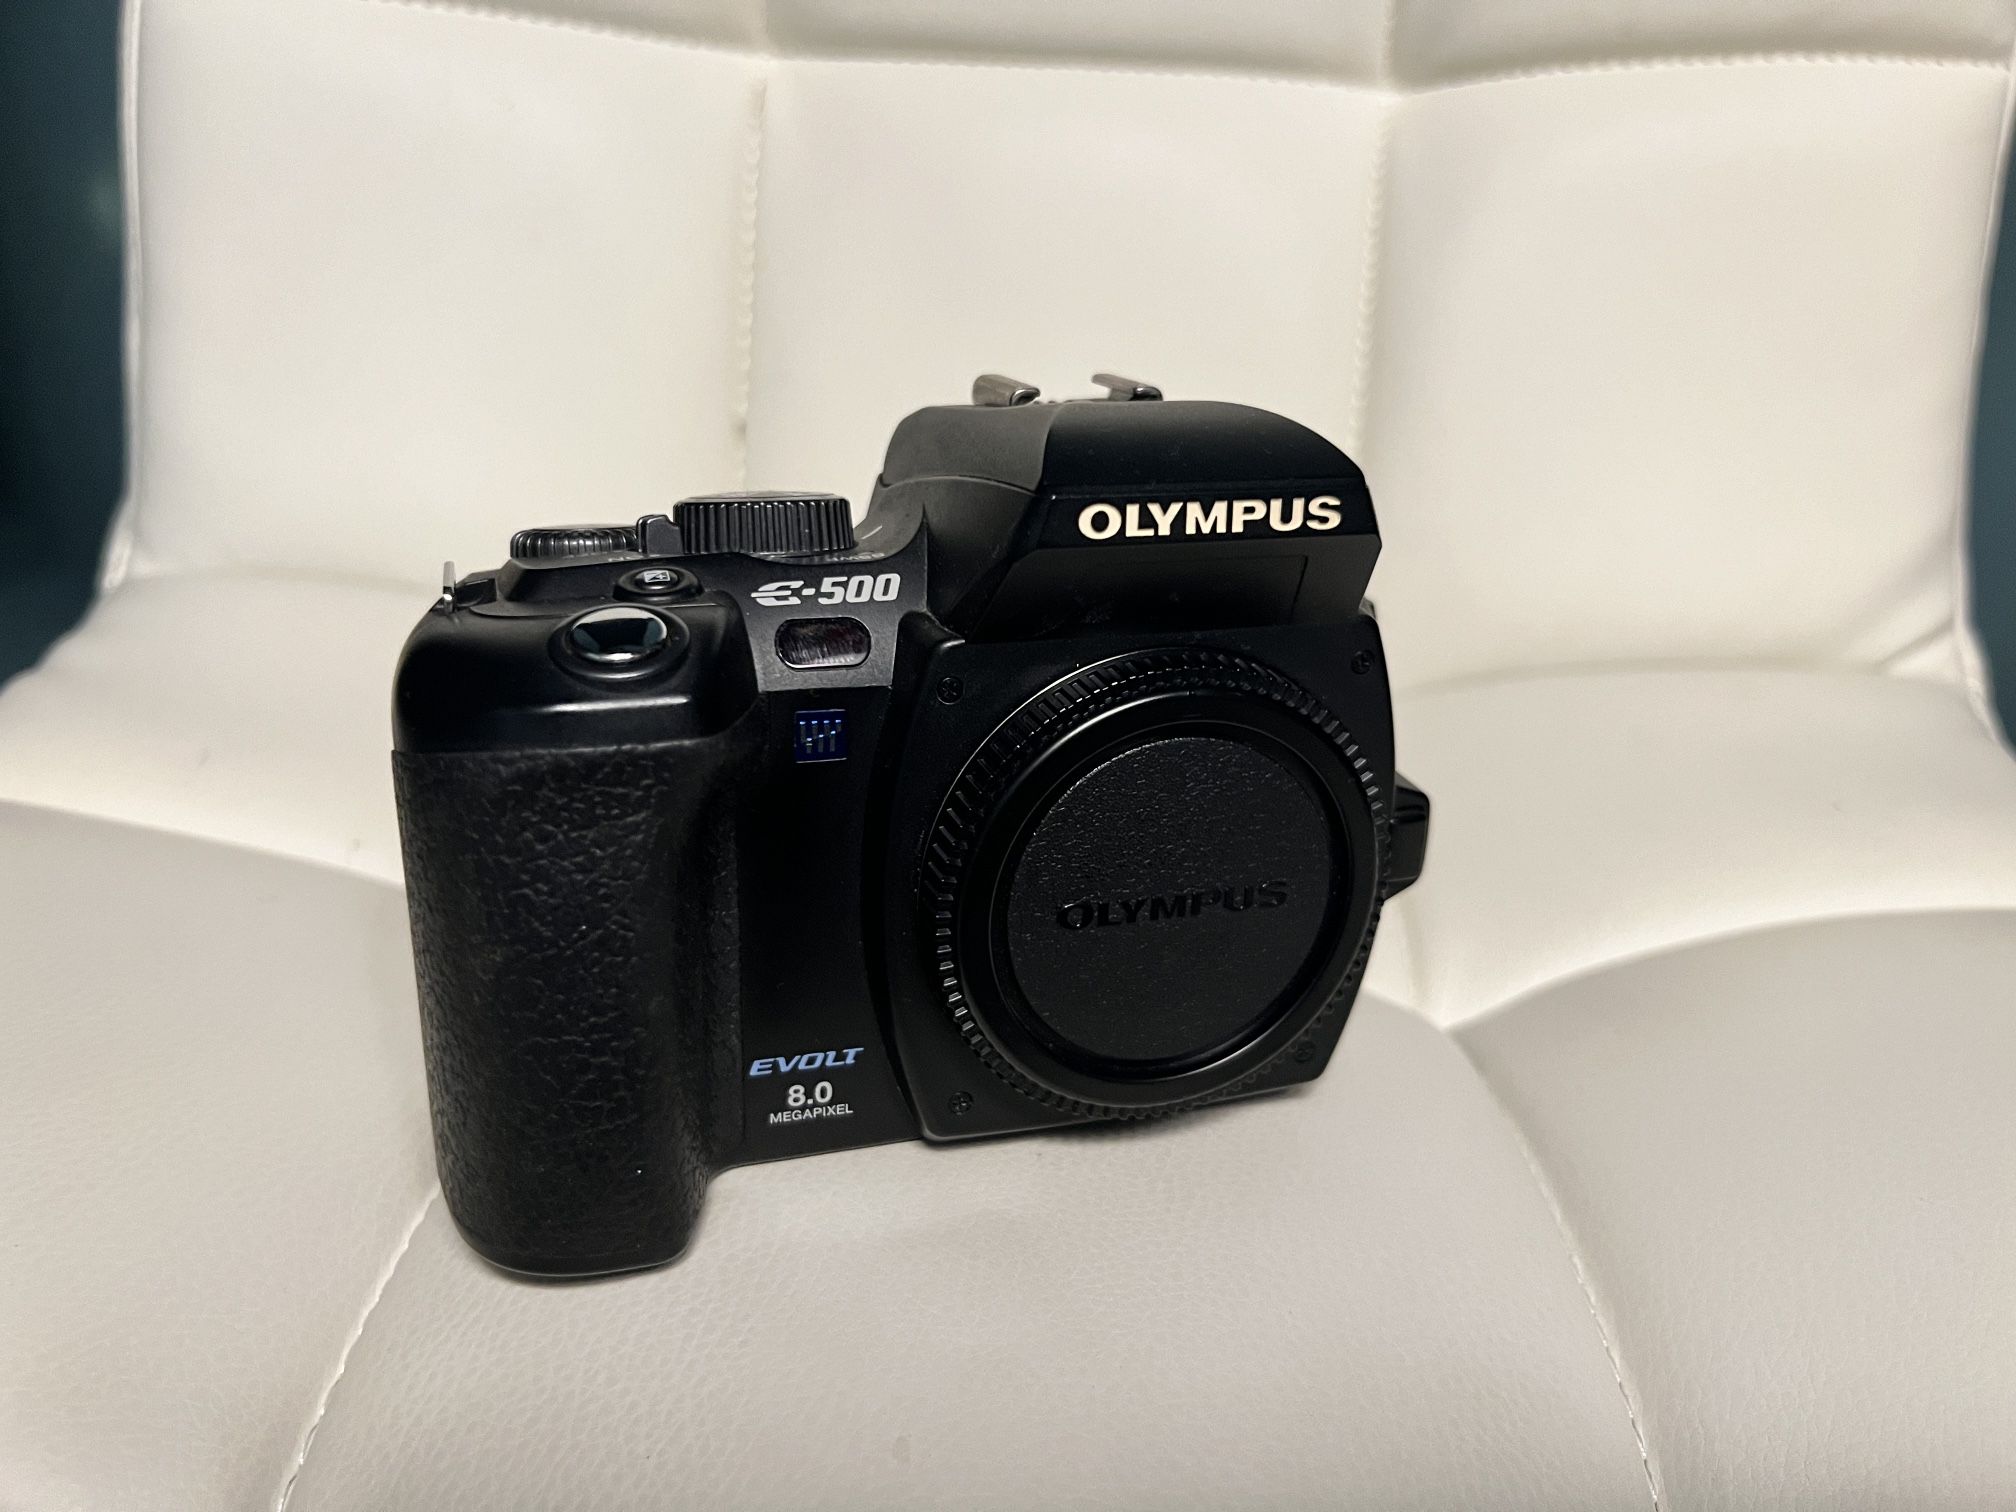 Olympus E-500 Dslr With Kodak CCD sensor